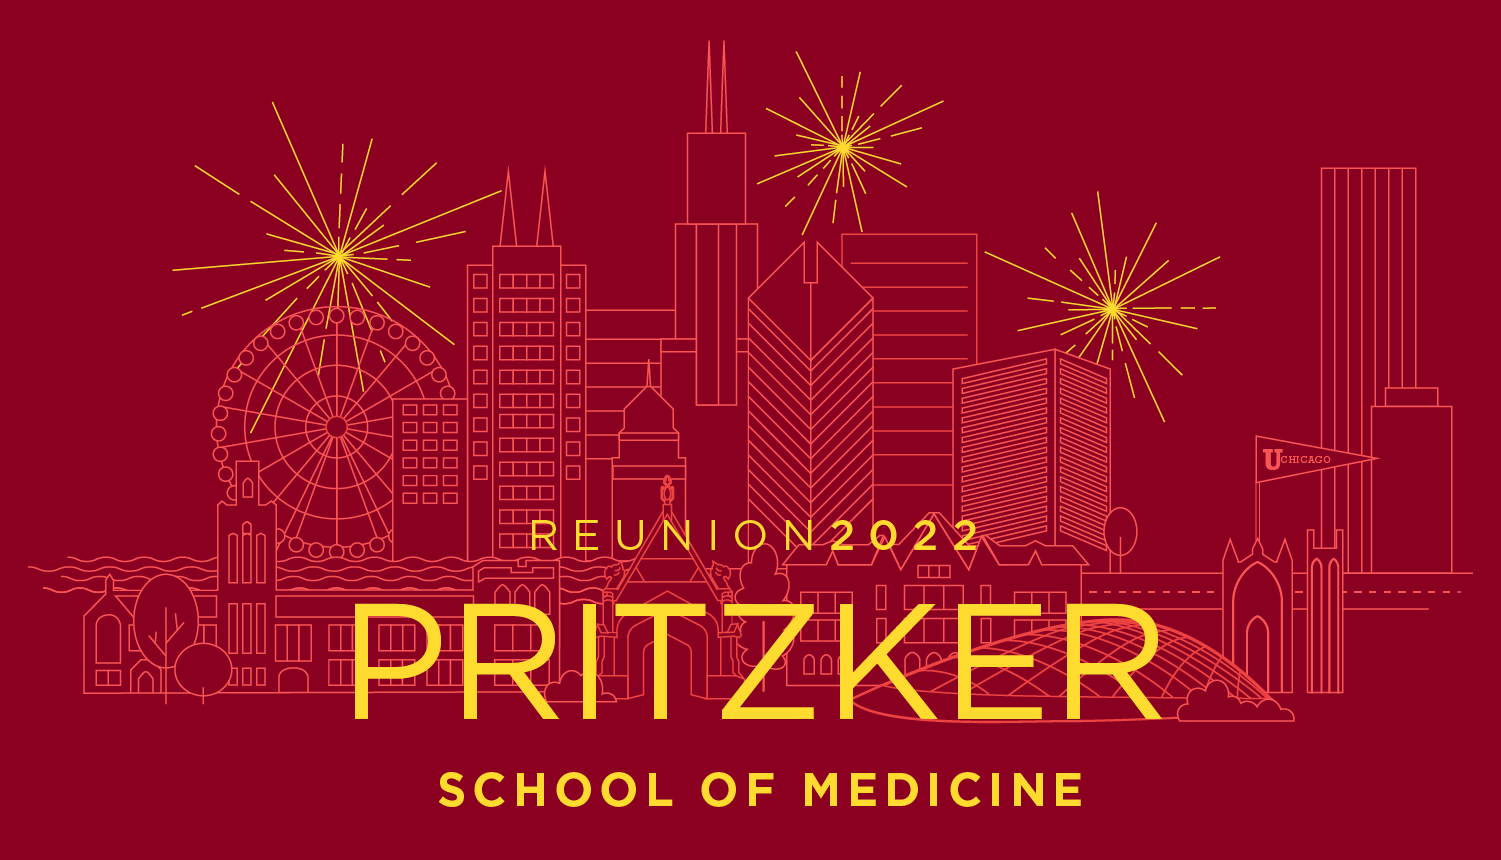 Chicago illustration - Reunion 2022 Pritzker School of Medicine